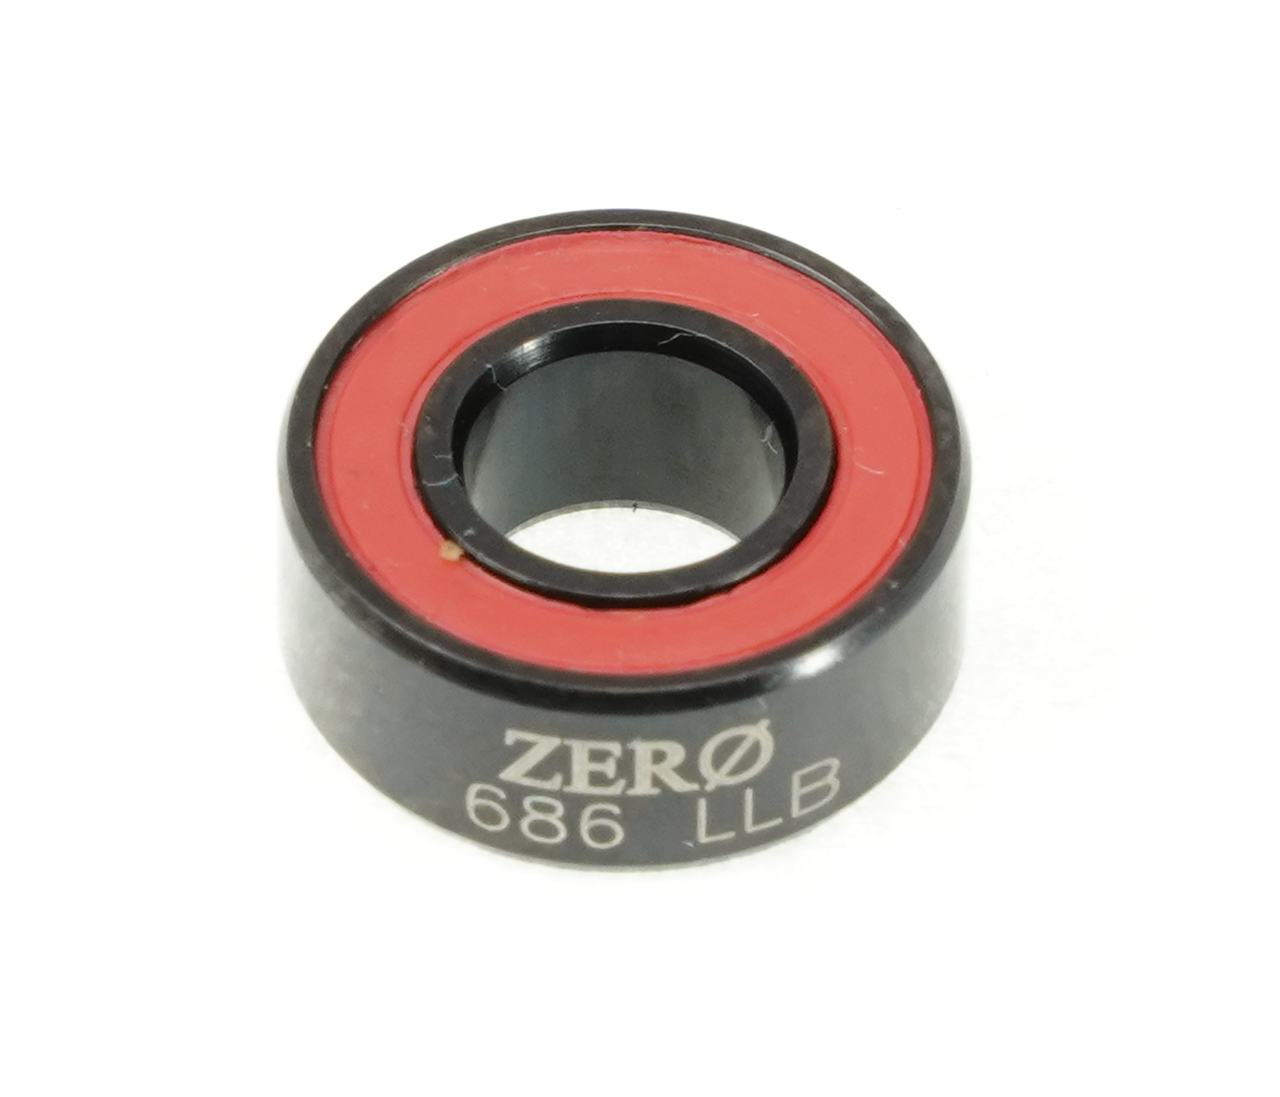 Enduro CO 686 LLB - Enduro Zero, Black-Oxide, Ceramic Hybrid, ABEC-5, Radial Bearing (C3 Clearance) - 6mm x 13mm x 5mm